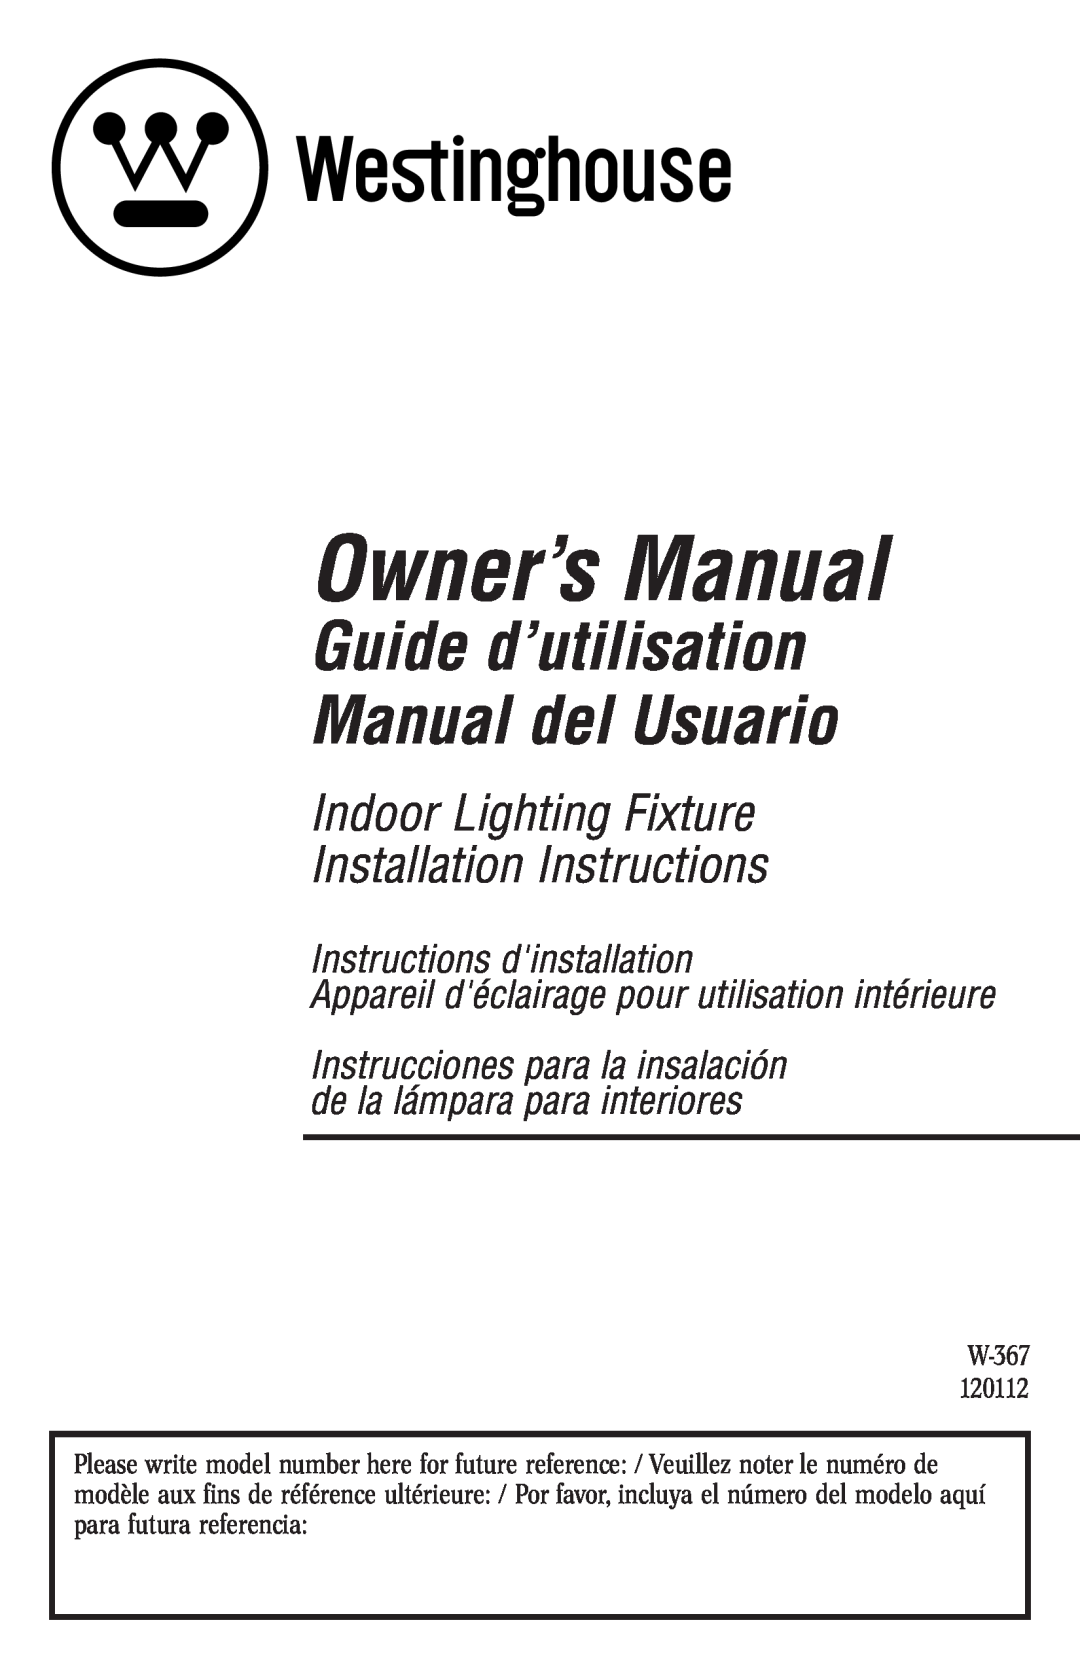 Westinghouse W-367 owner manual Guide d’utilisation Manual del Usuario, Indoor Lighting Fixture Installation Instructions 